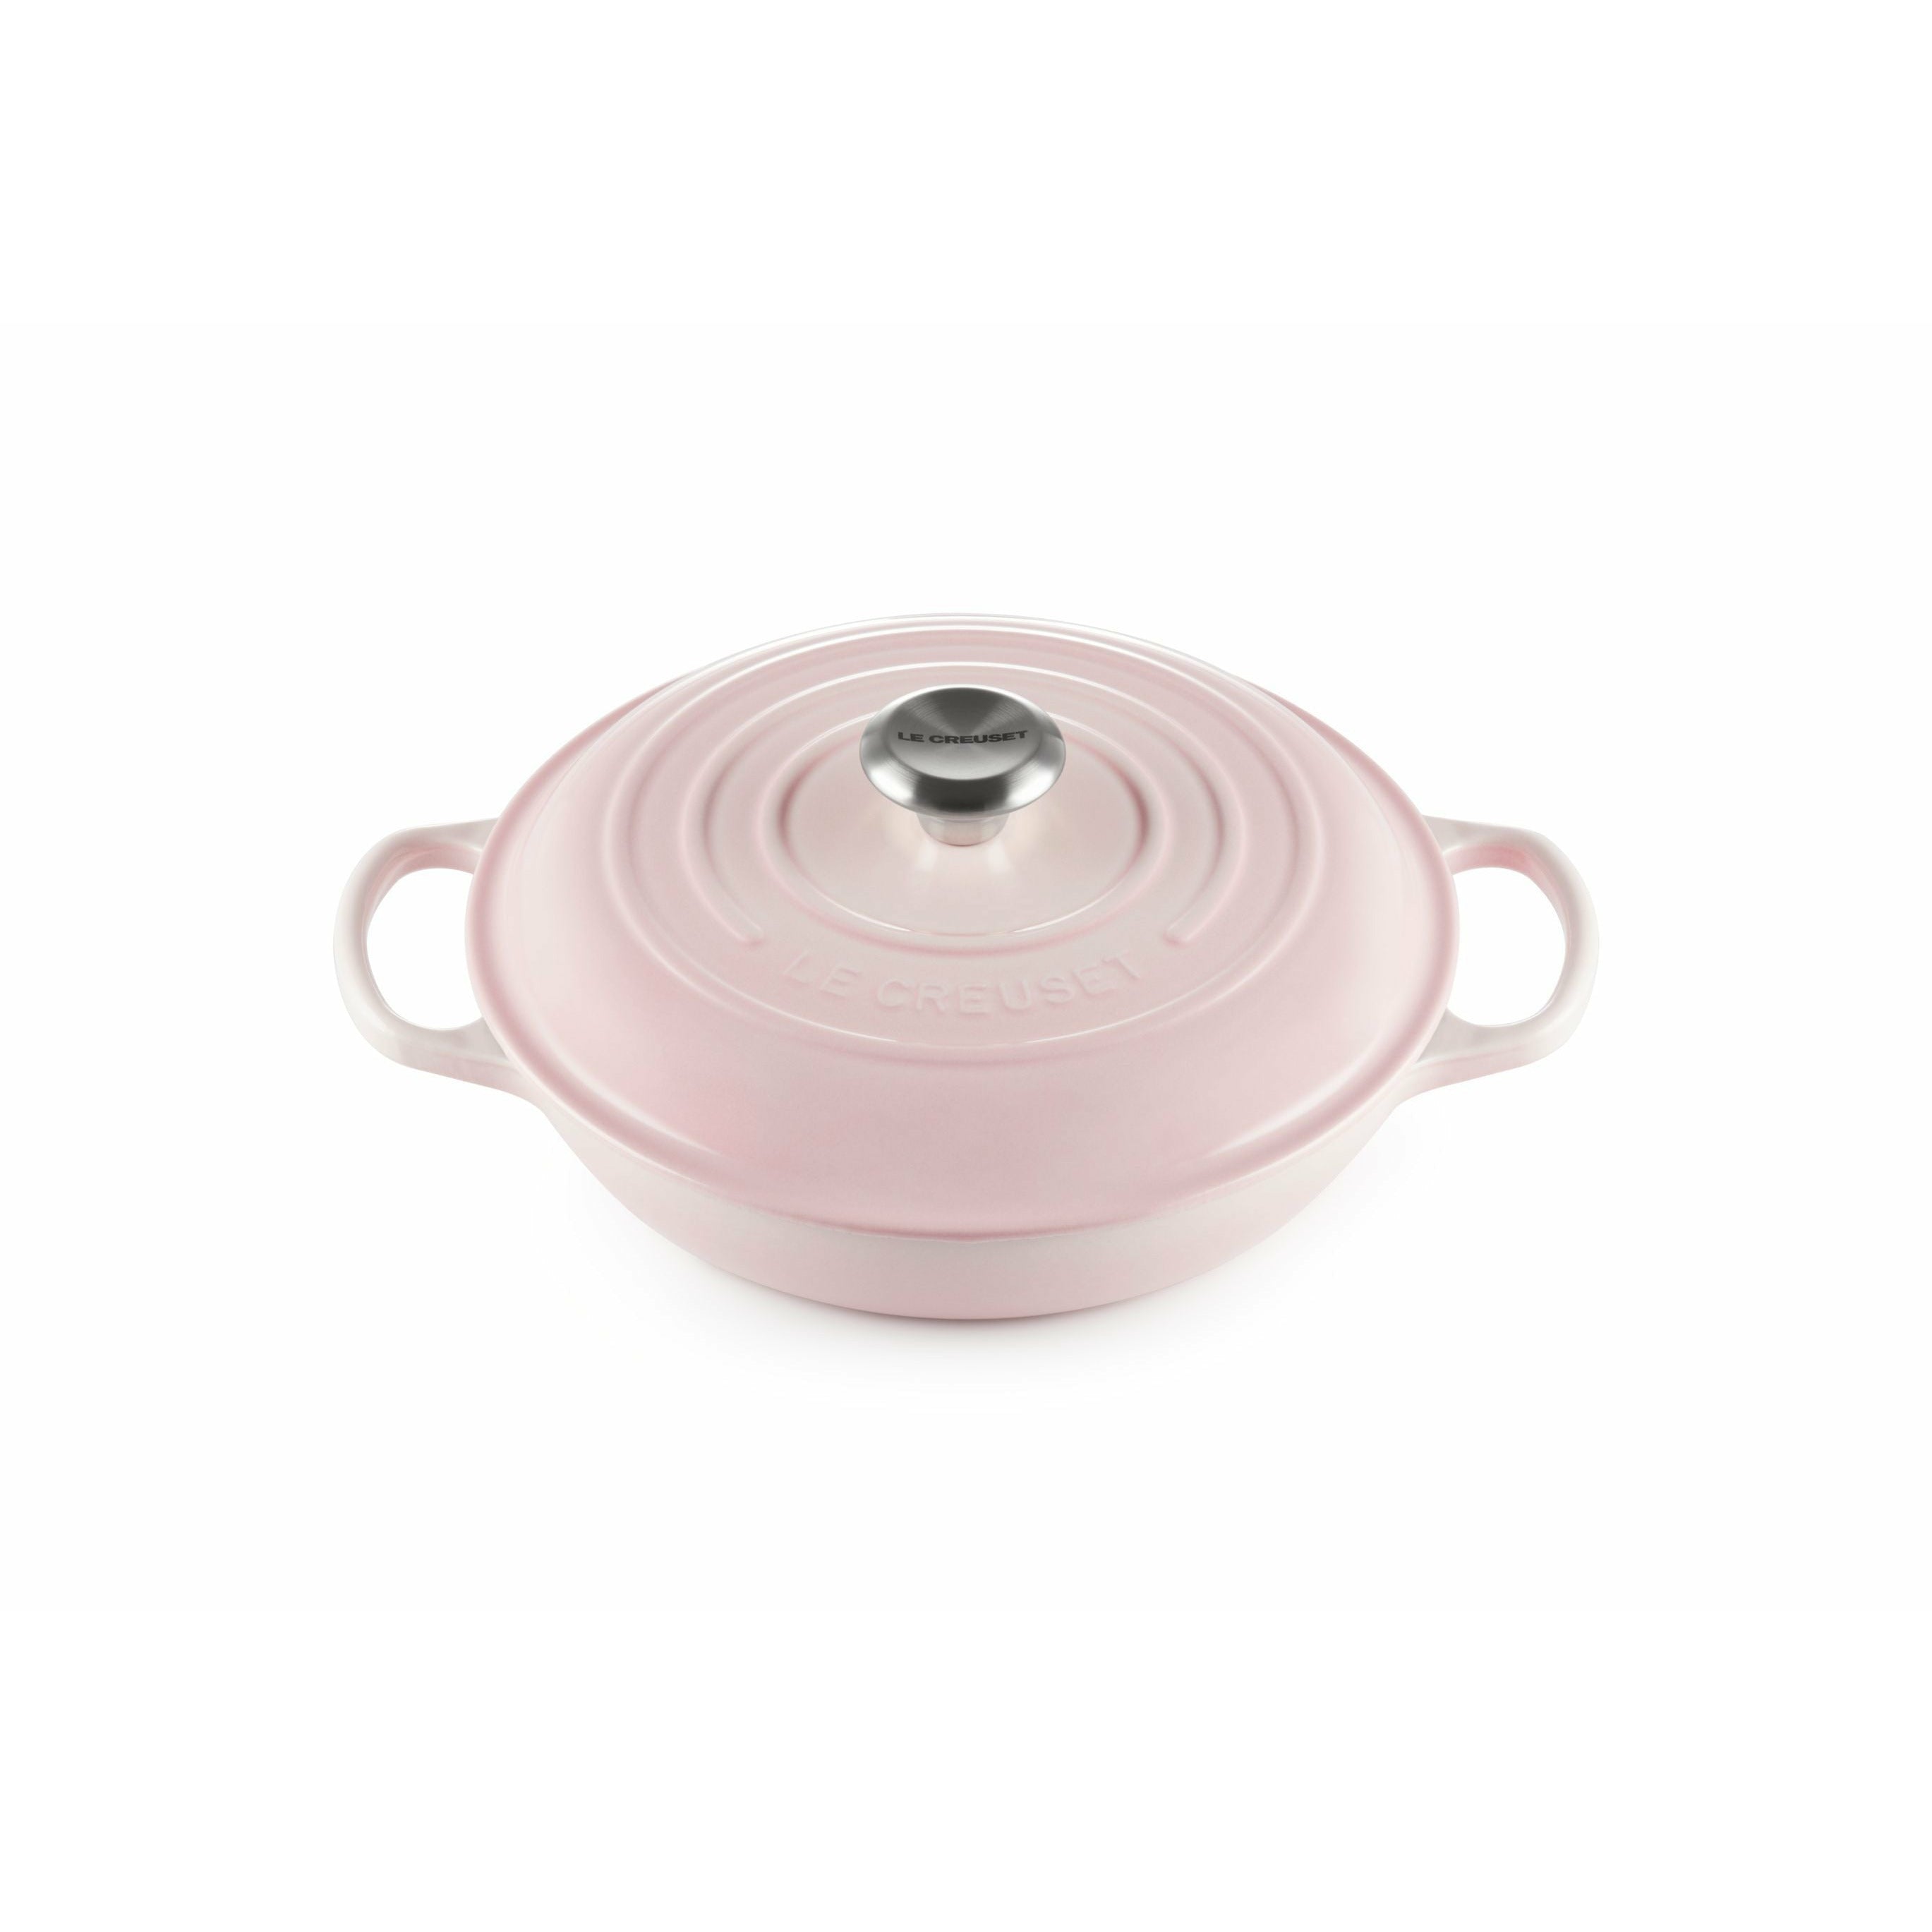 Le Creuset firma Gourmet Professional Pot 26 cm, shell rosa